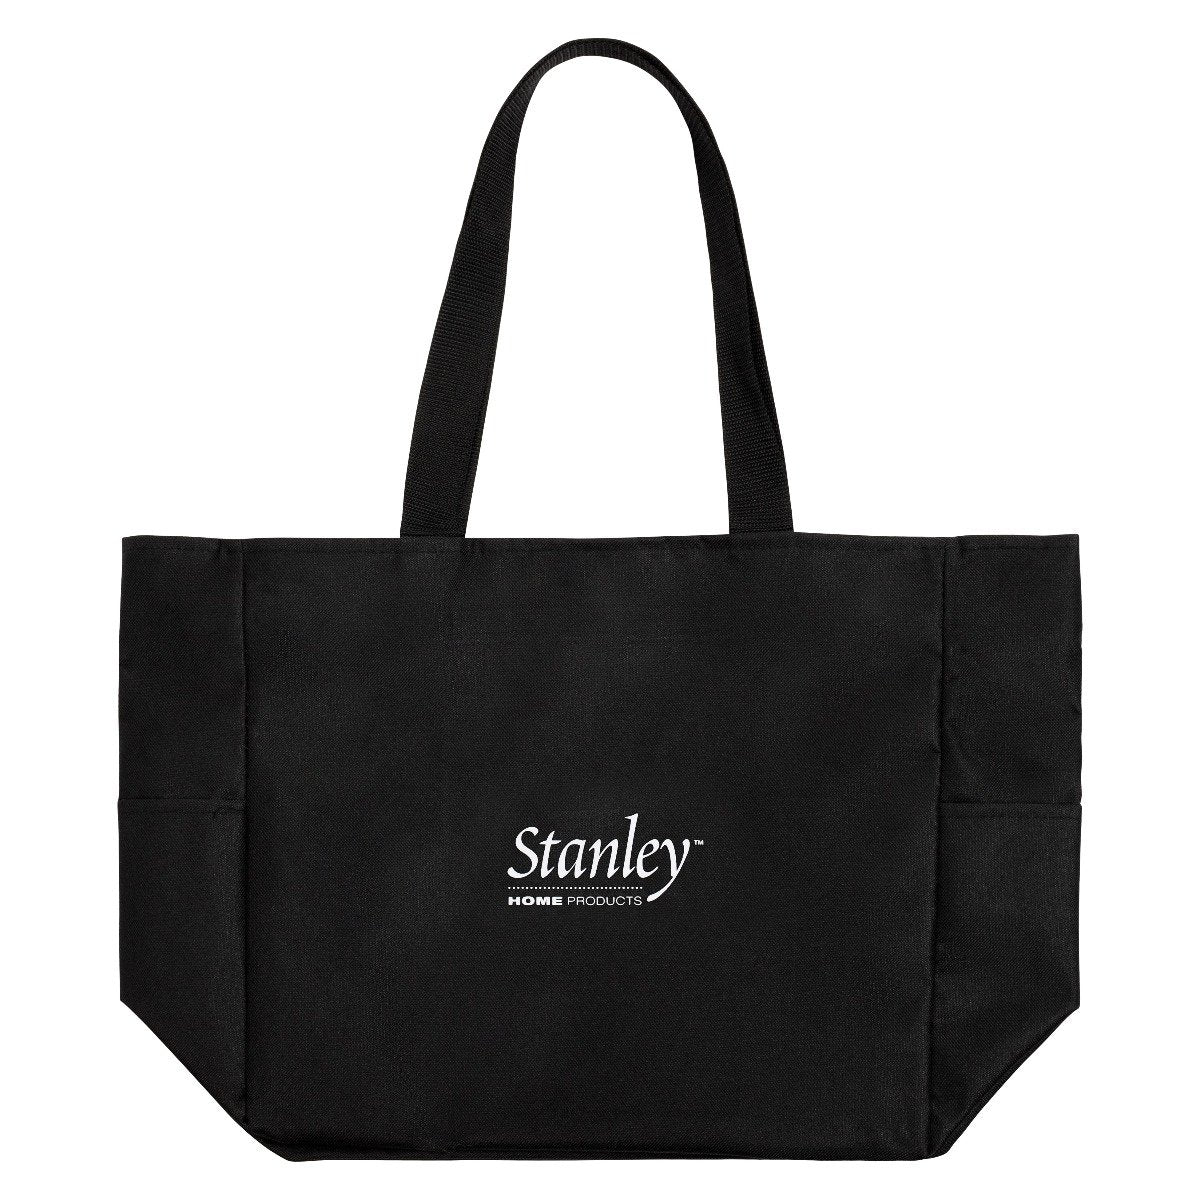 Polyester Zippered Bag with Fuller Brush & Stanley Logos